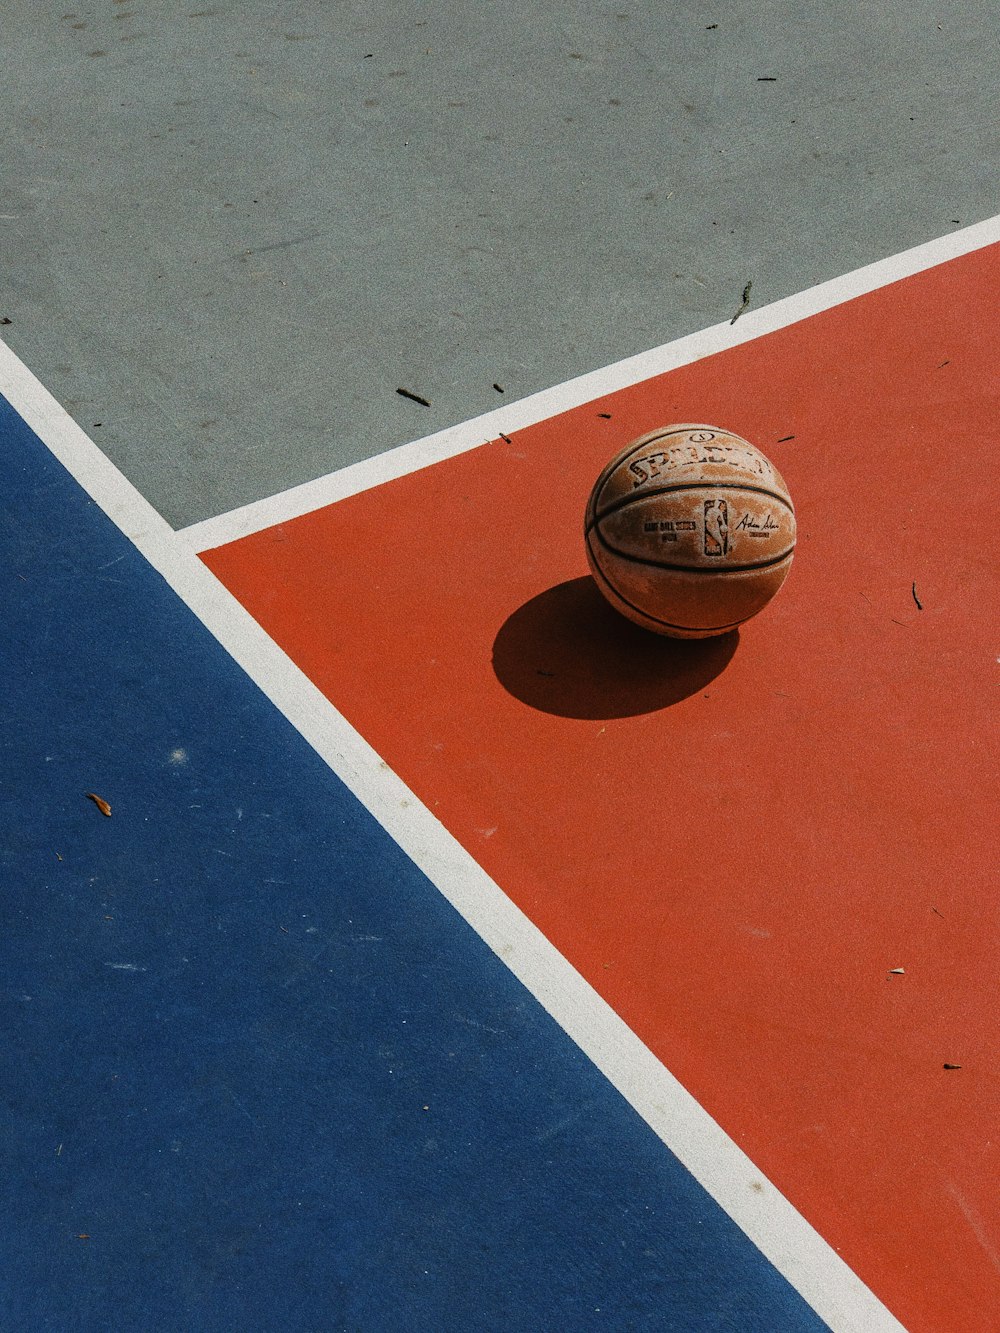 brown Spalding basketball